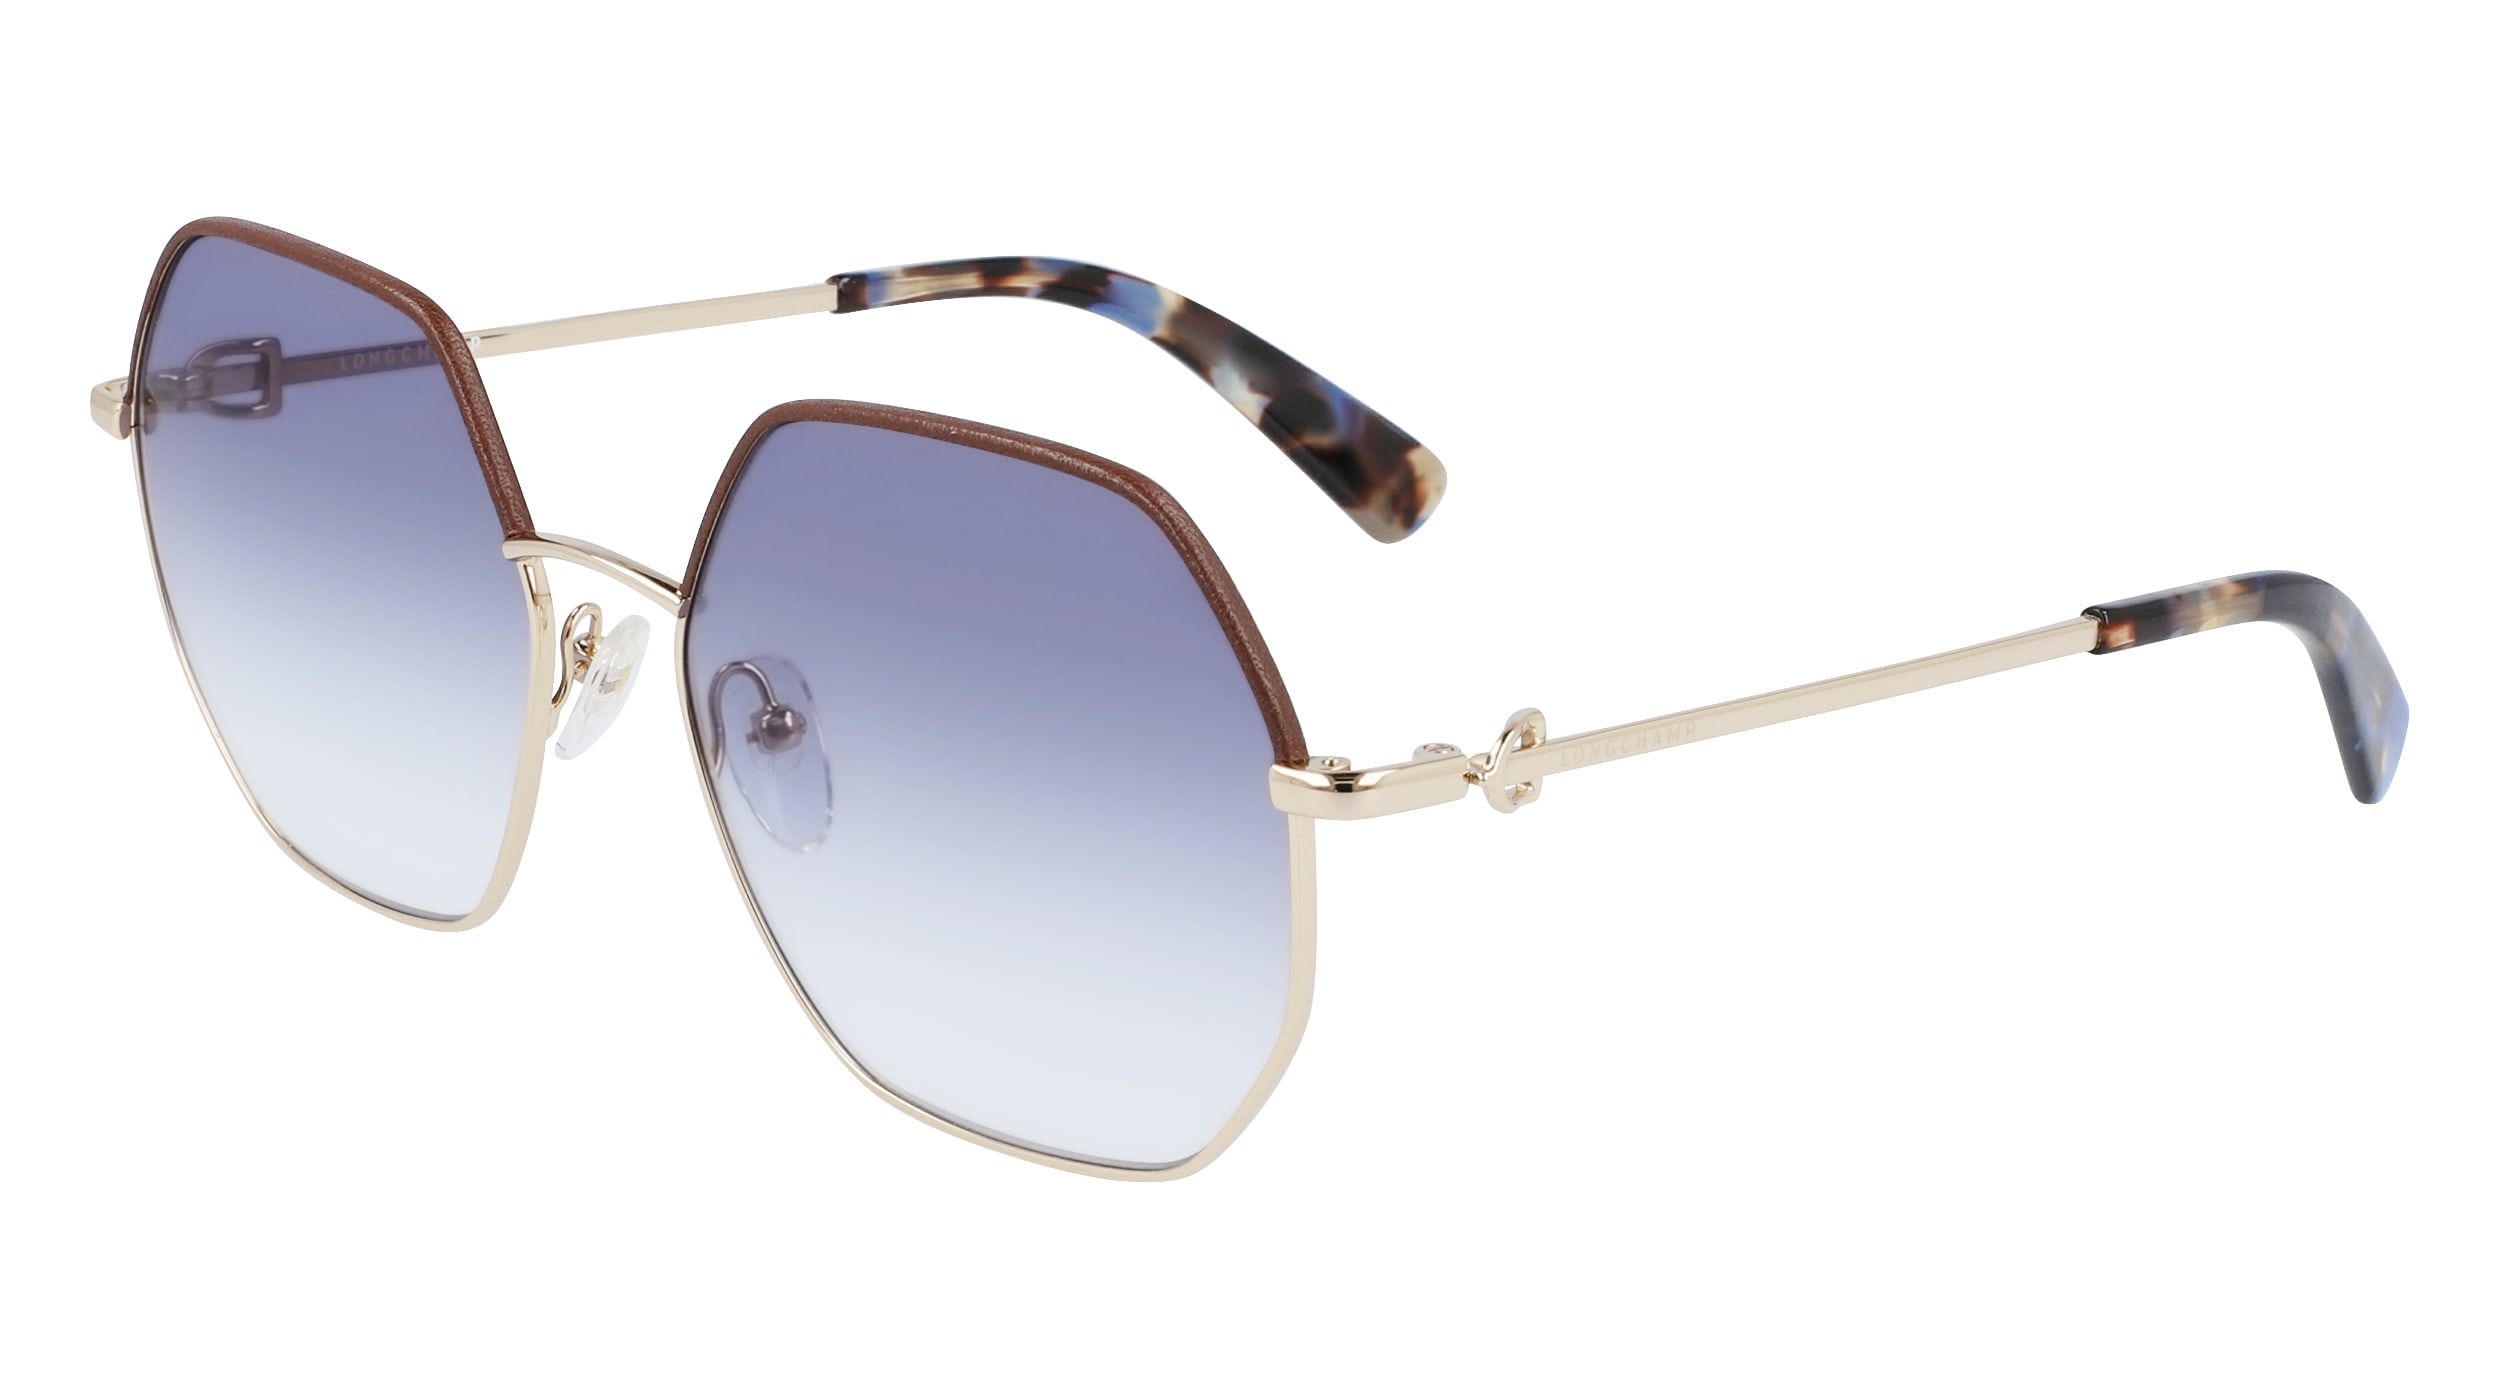 Longchamp Eyewear introduz novos óculos de sol inspirados na bolsa Amazone